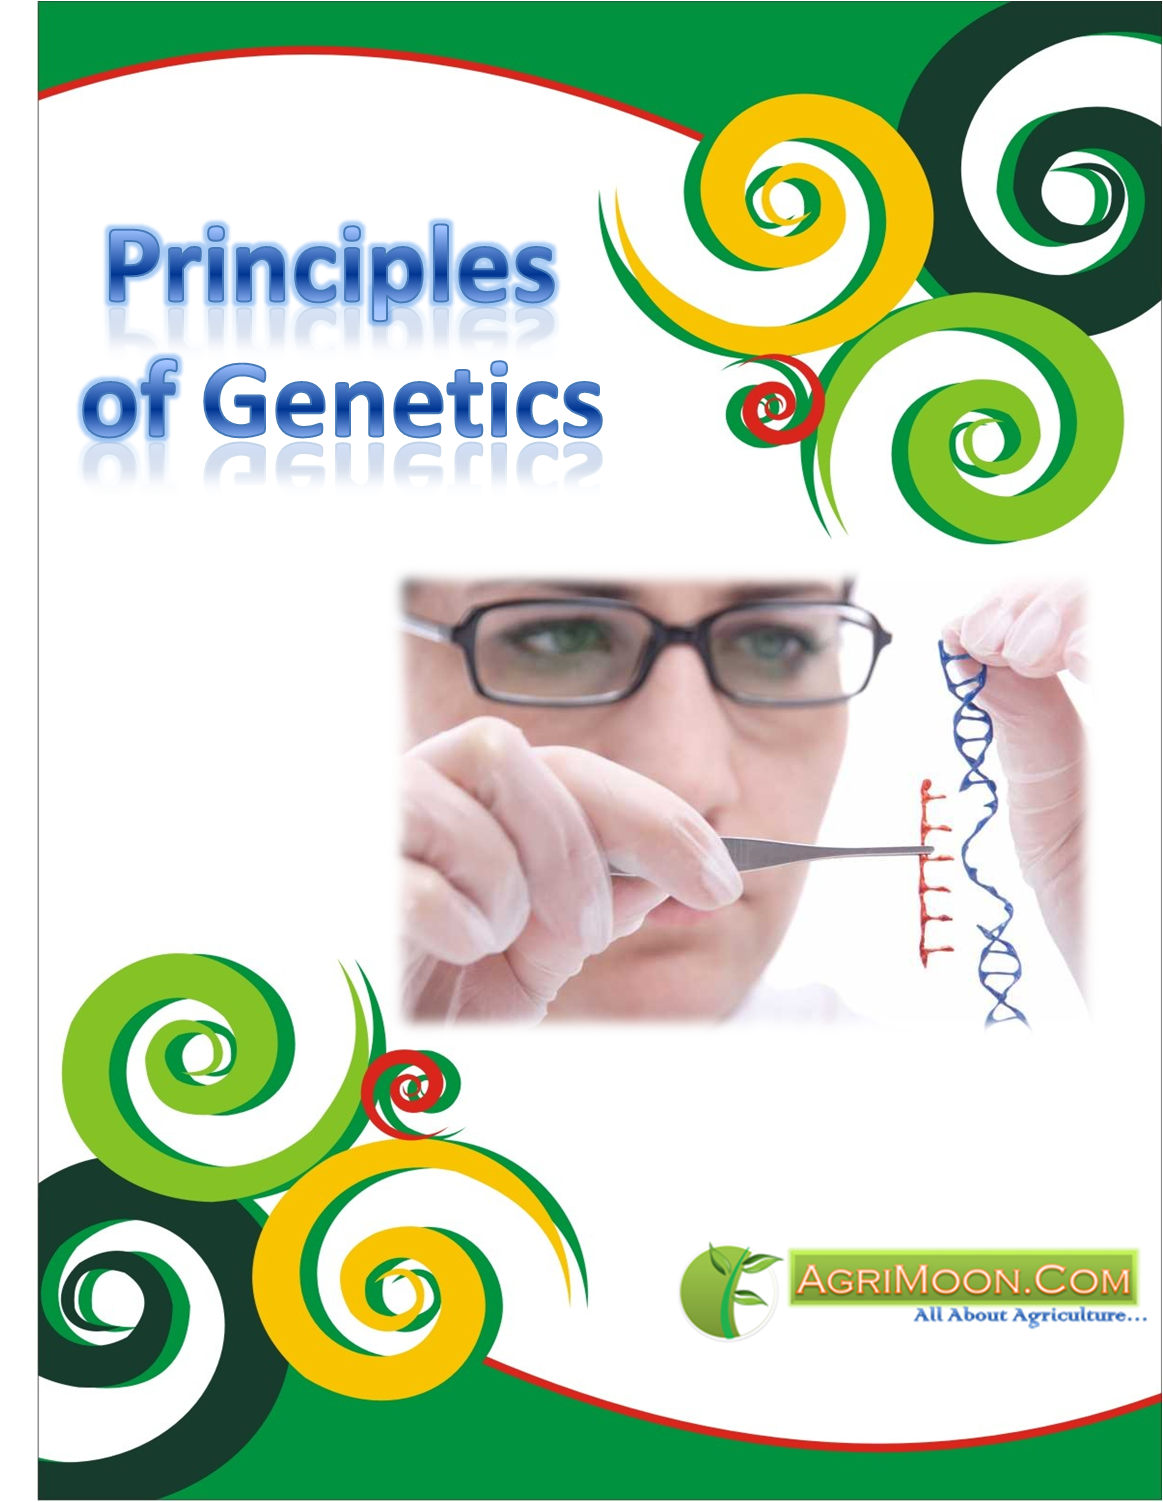 strickberger genetics ebook free